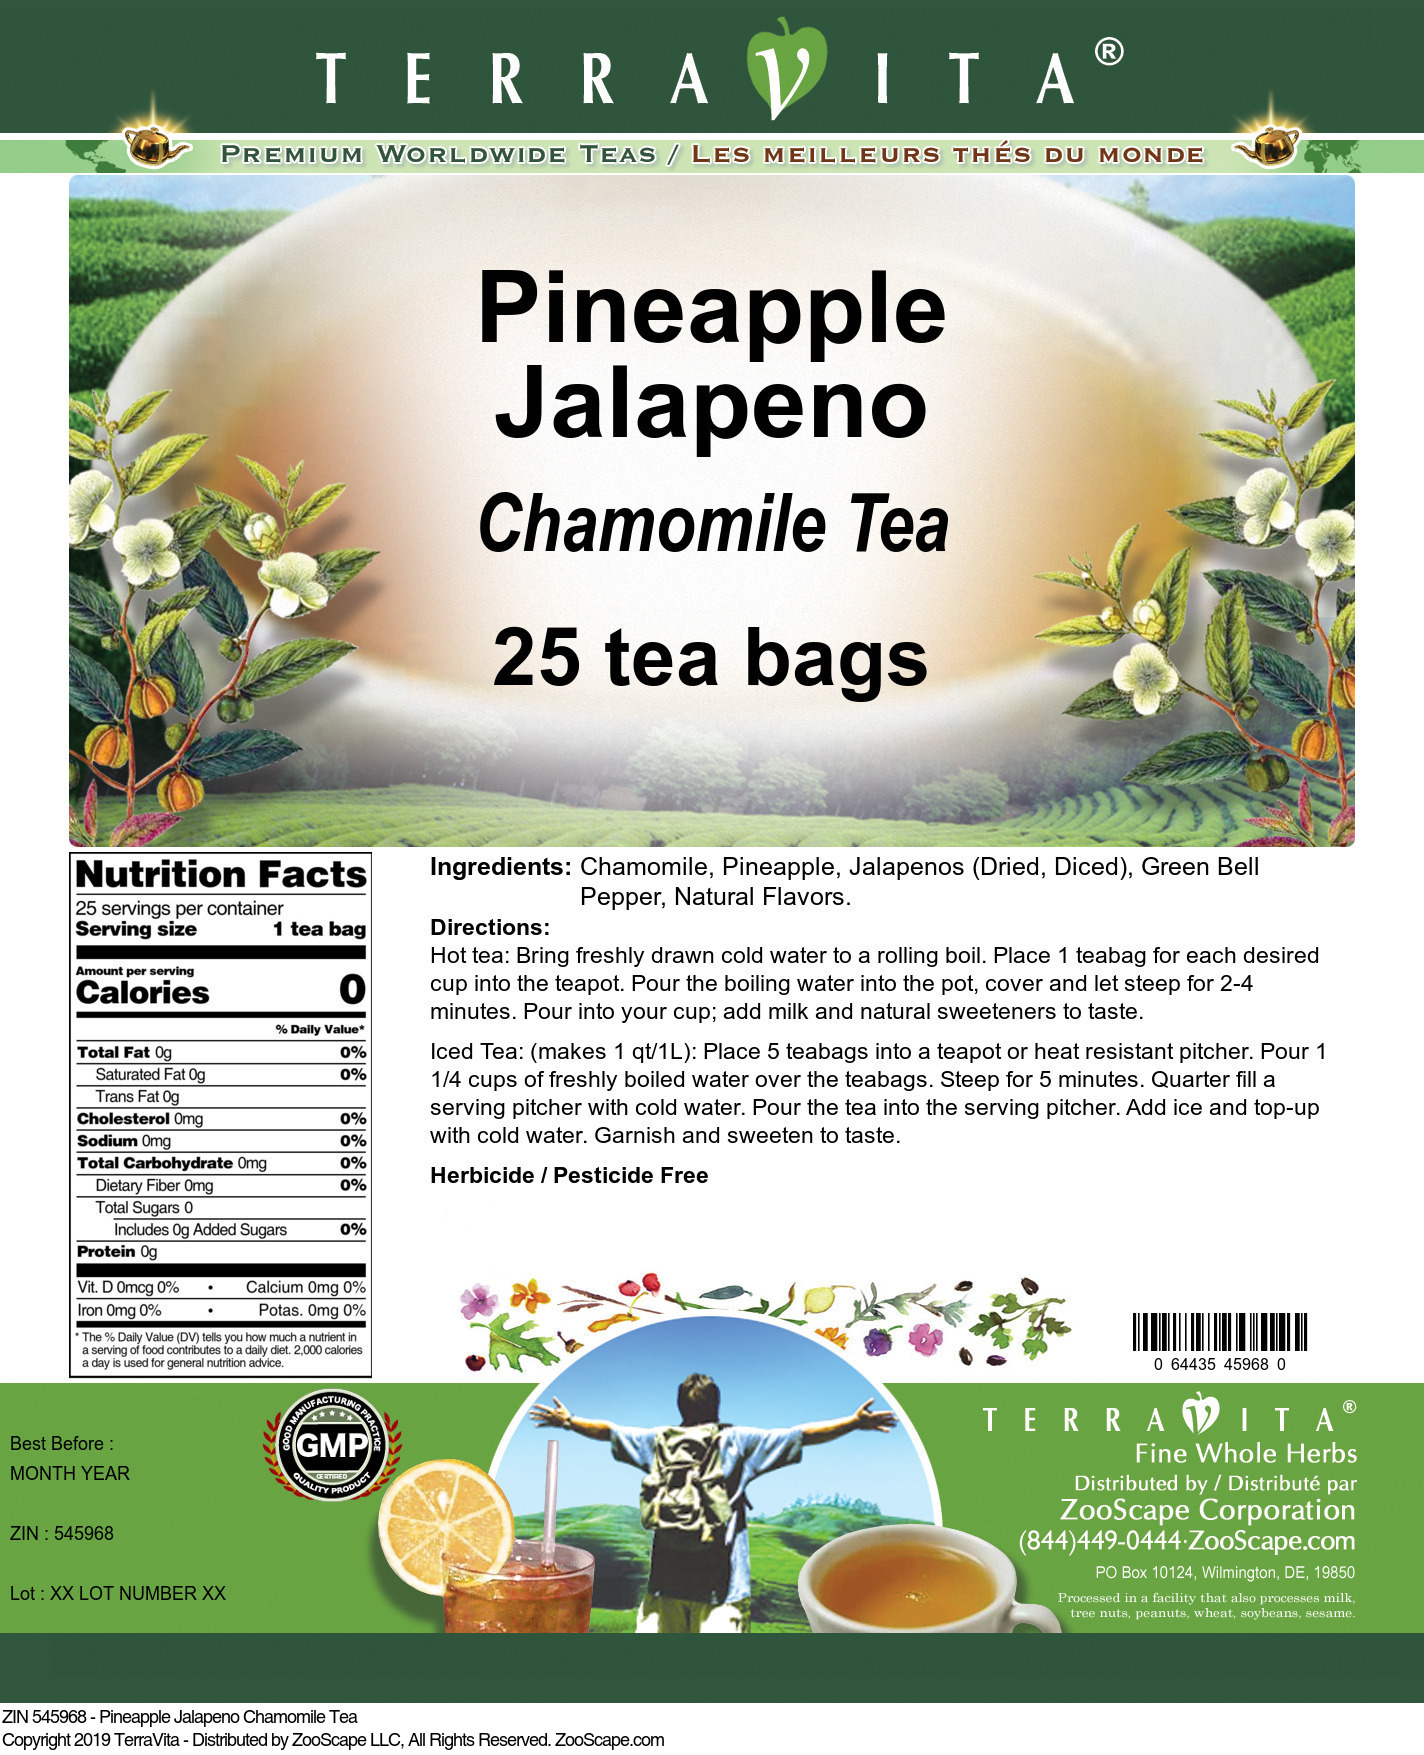 Pineapple Jalapeno Chamomile Tea - Label